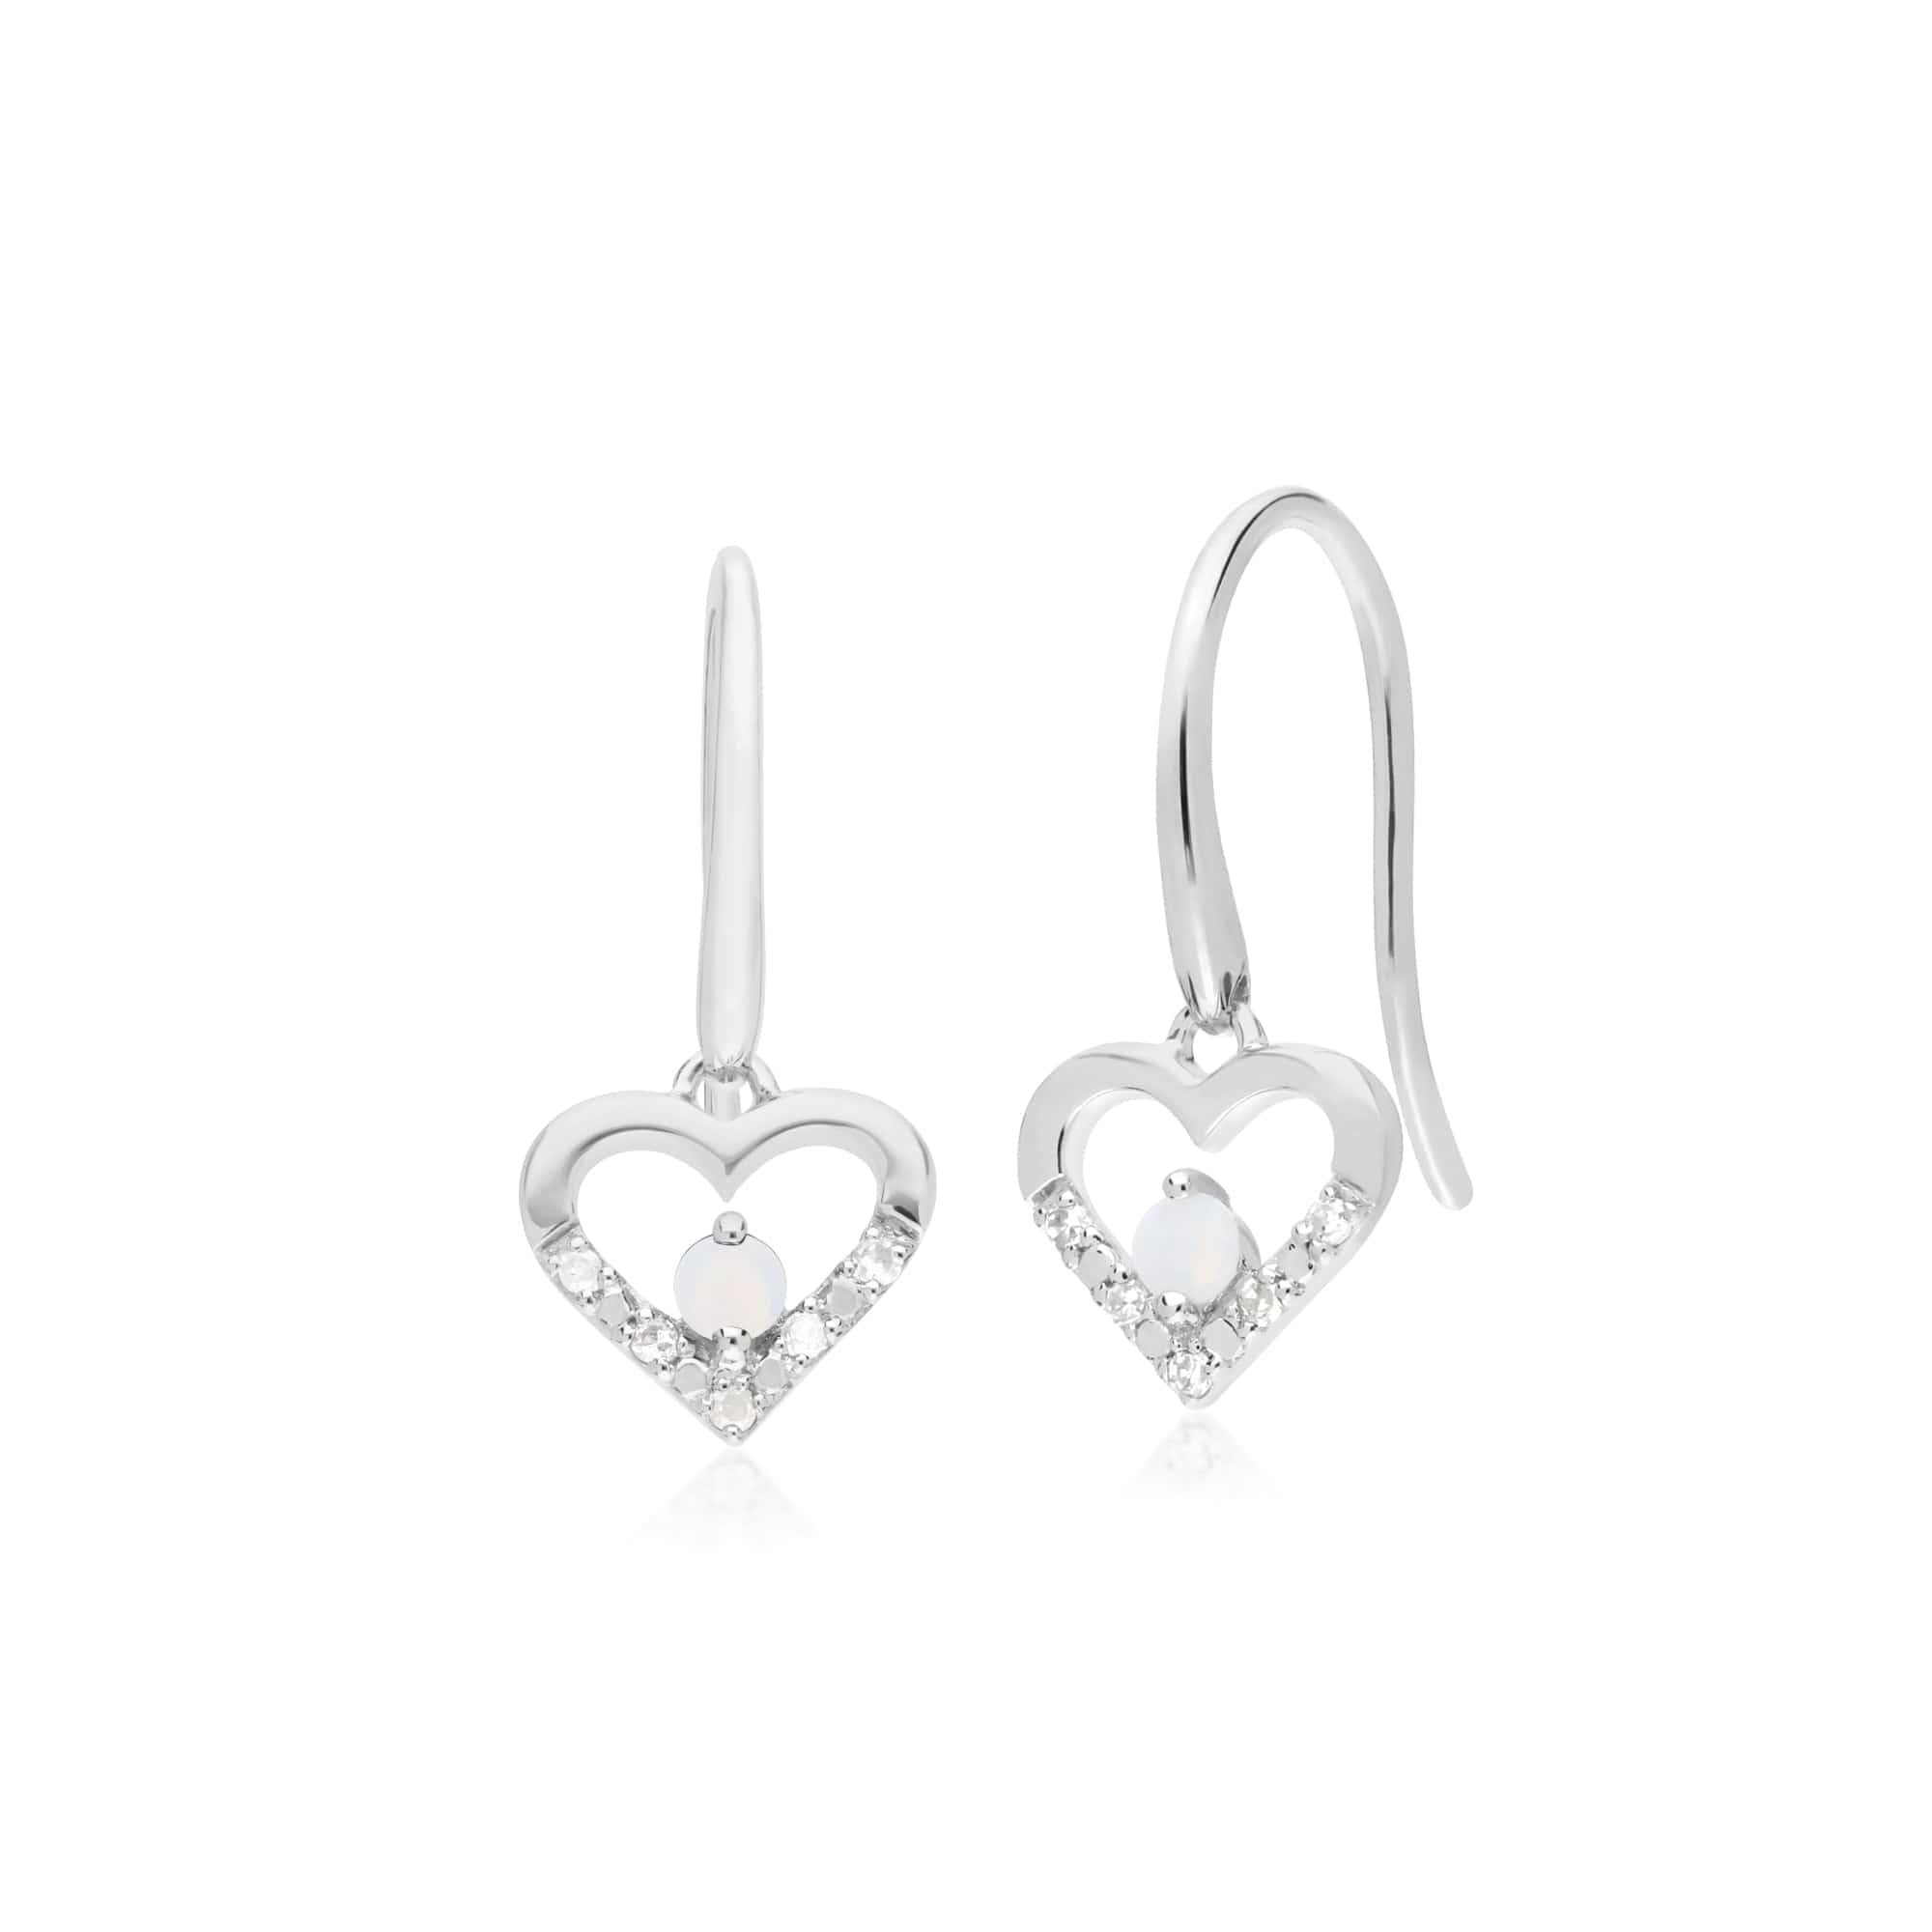 162E0258109-162P0219109 Classic Round Opal & Diamond Heart Drop Earrings & Pendant Set in 9ct White Gold 2